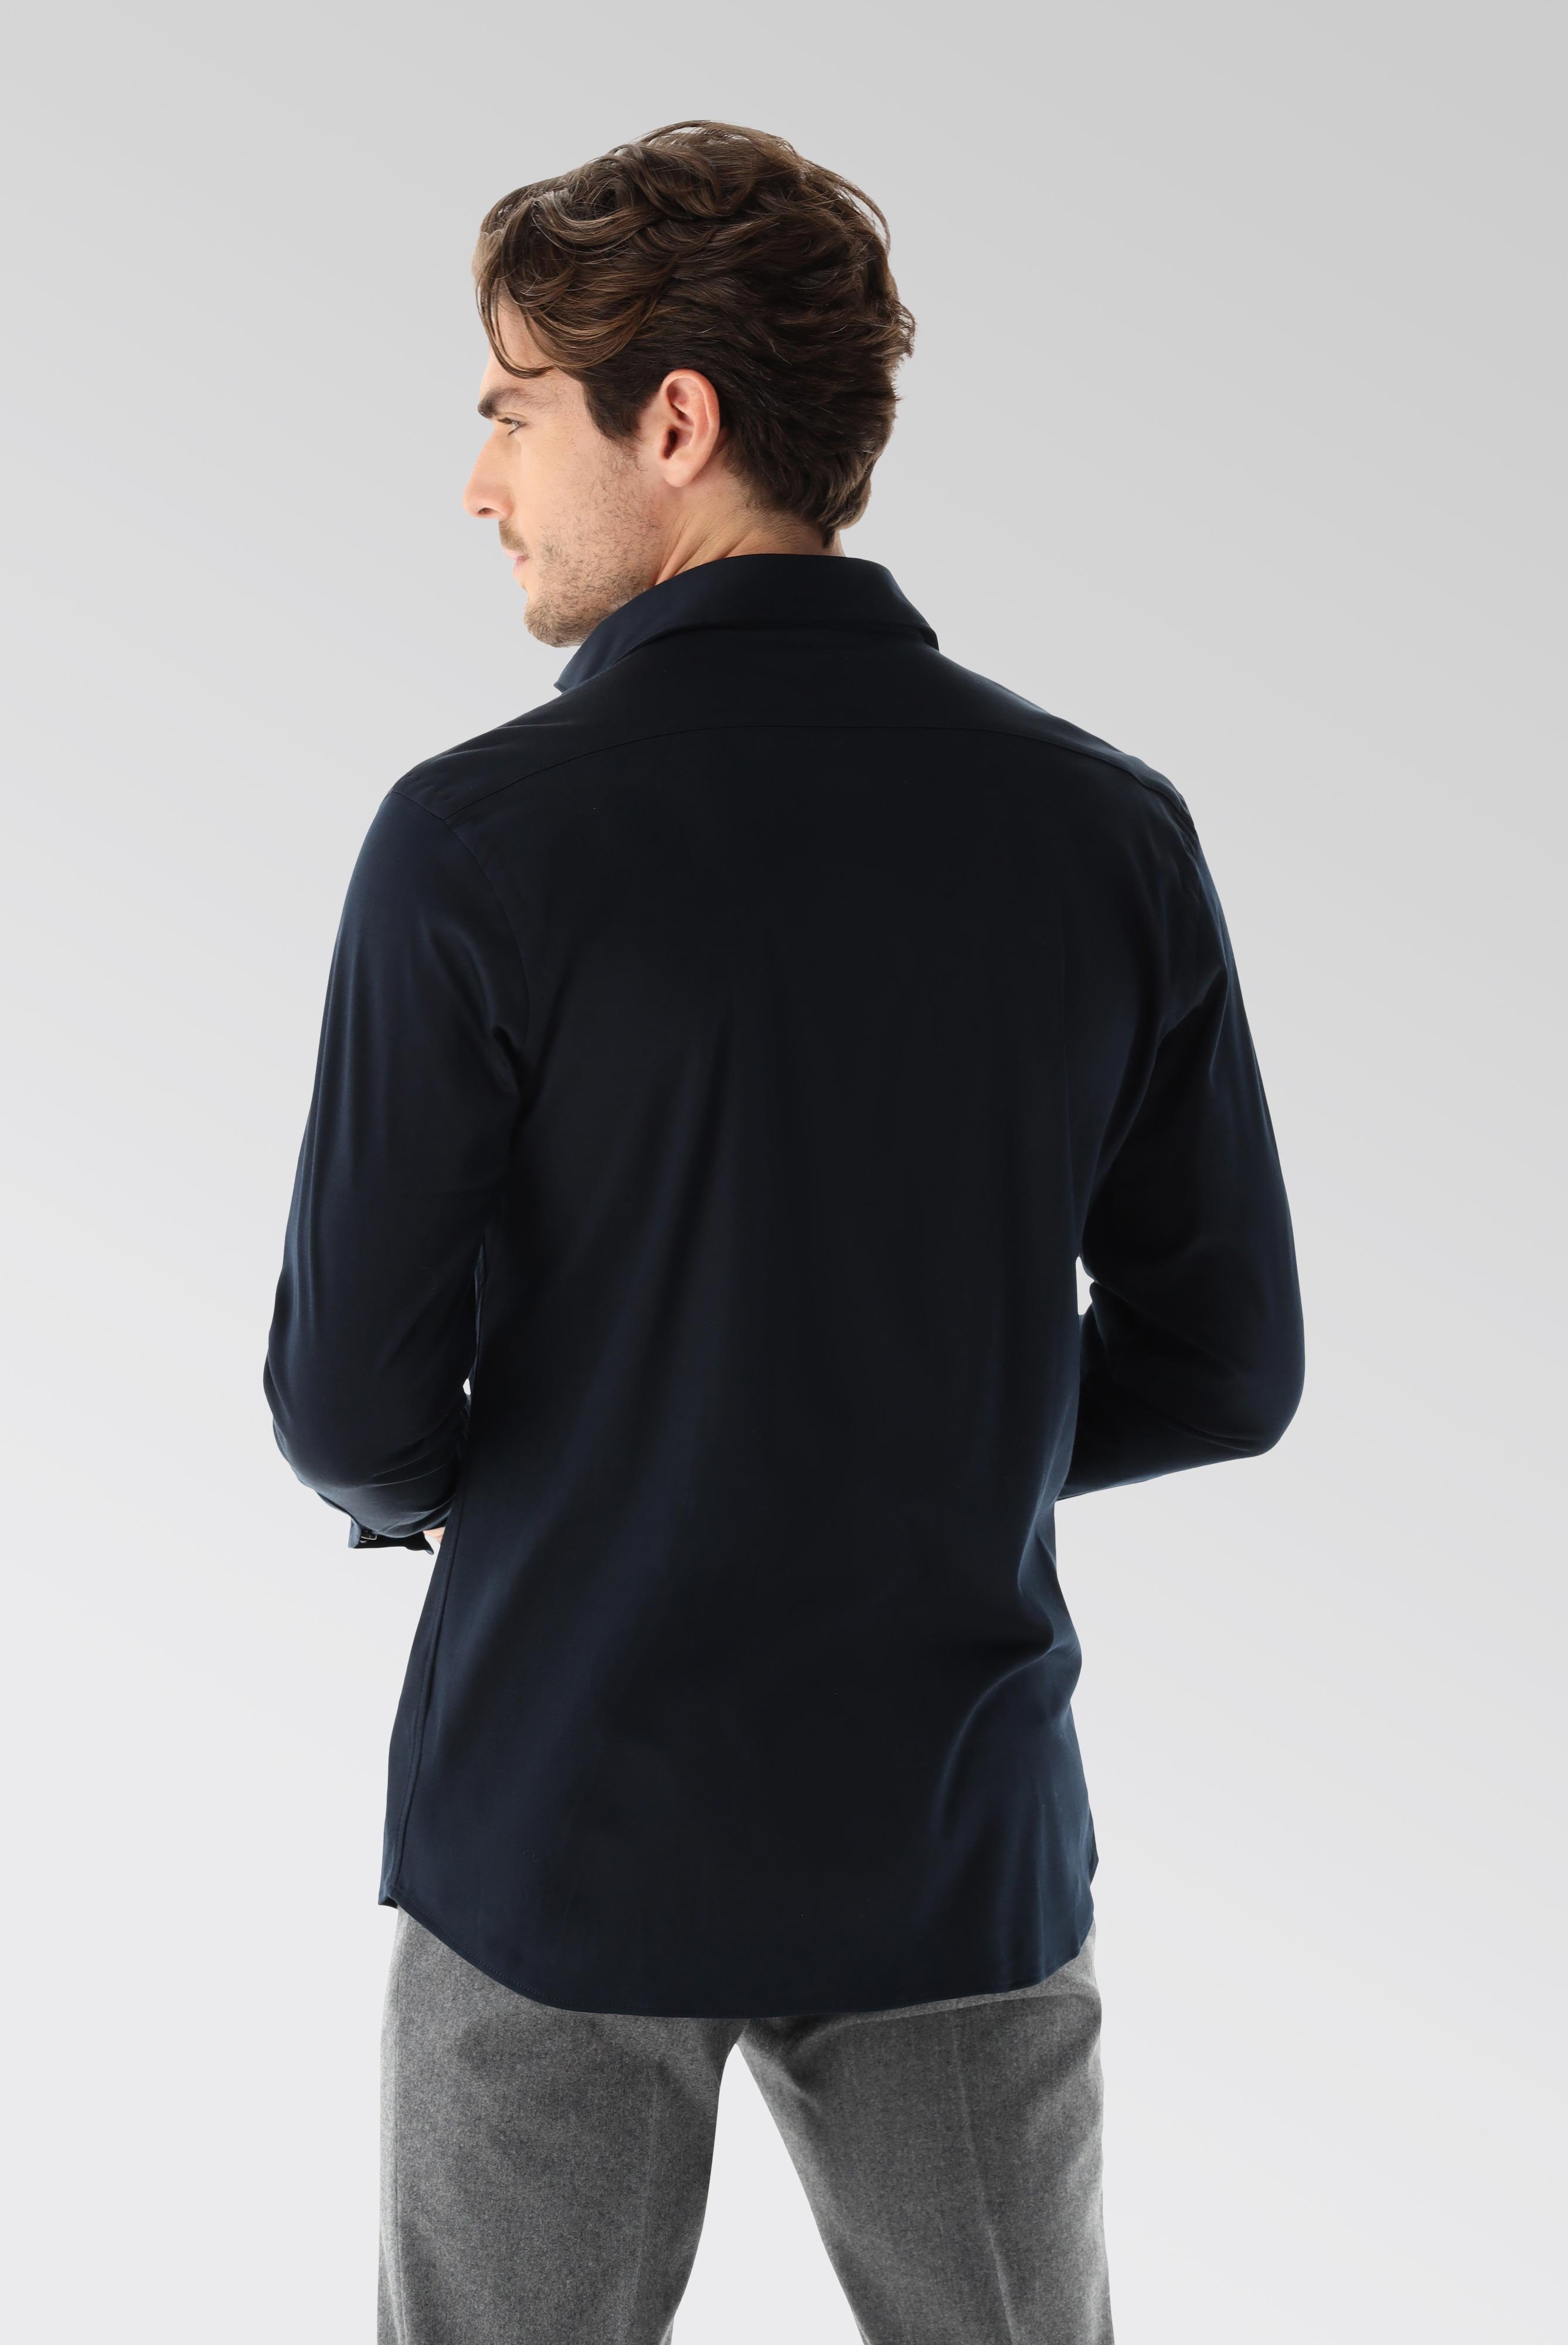 Easy Iron Shirts+Swiss Cotton Jersey Shirt Tailor Fit+20.1683.UC.180031.790.XXL